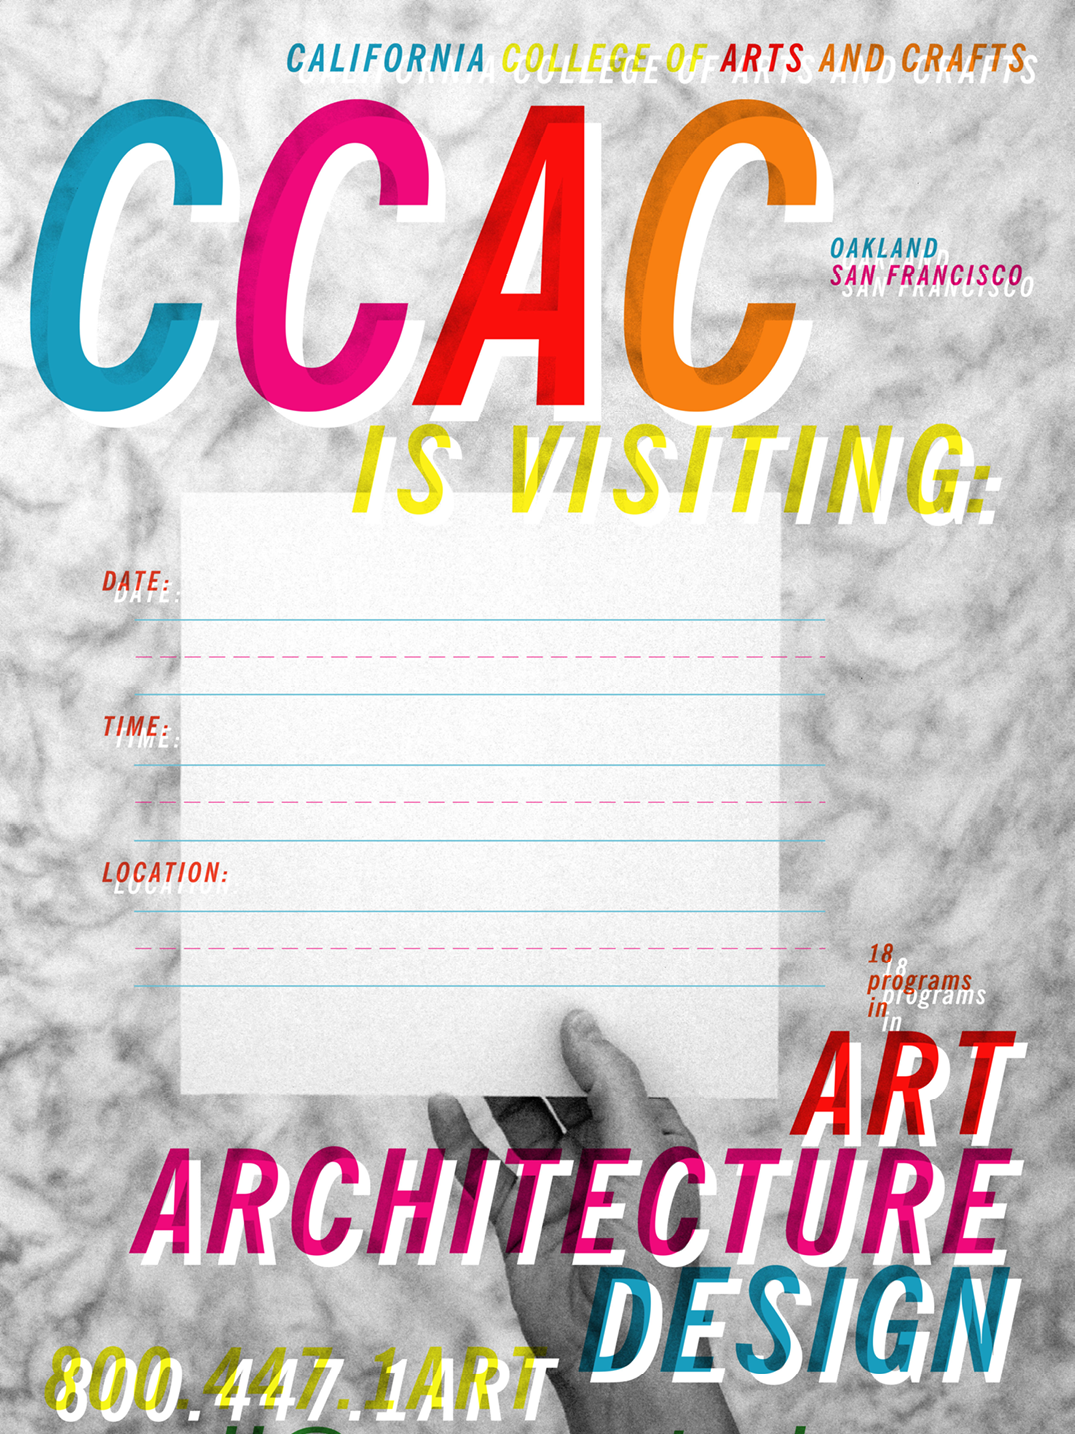 CCAC_is_Visiting_poster_2002_thumbnail.png